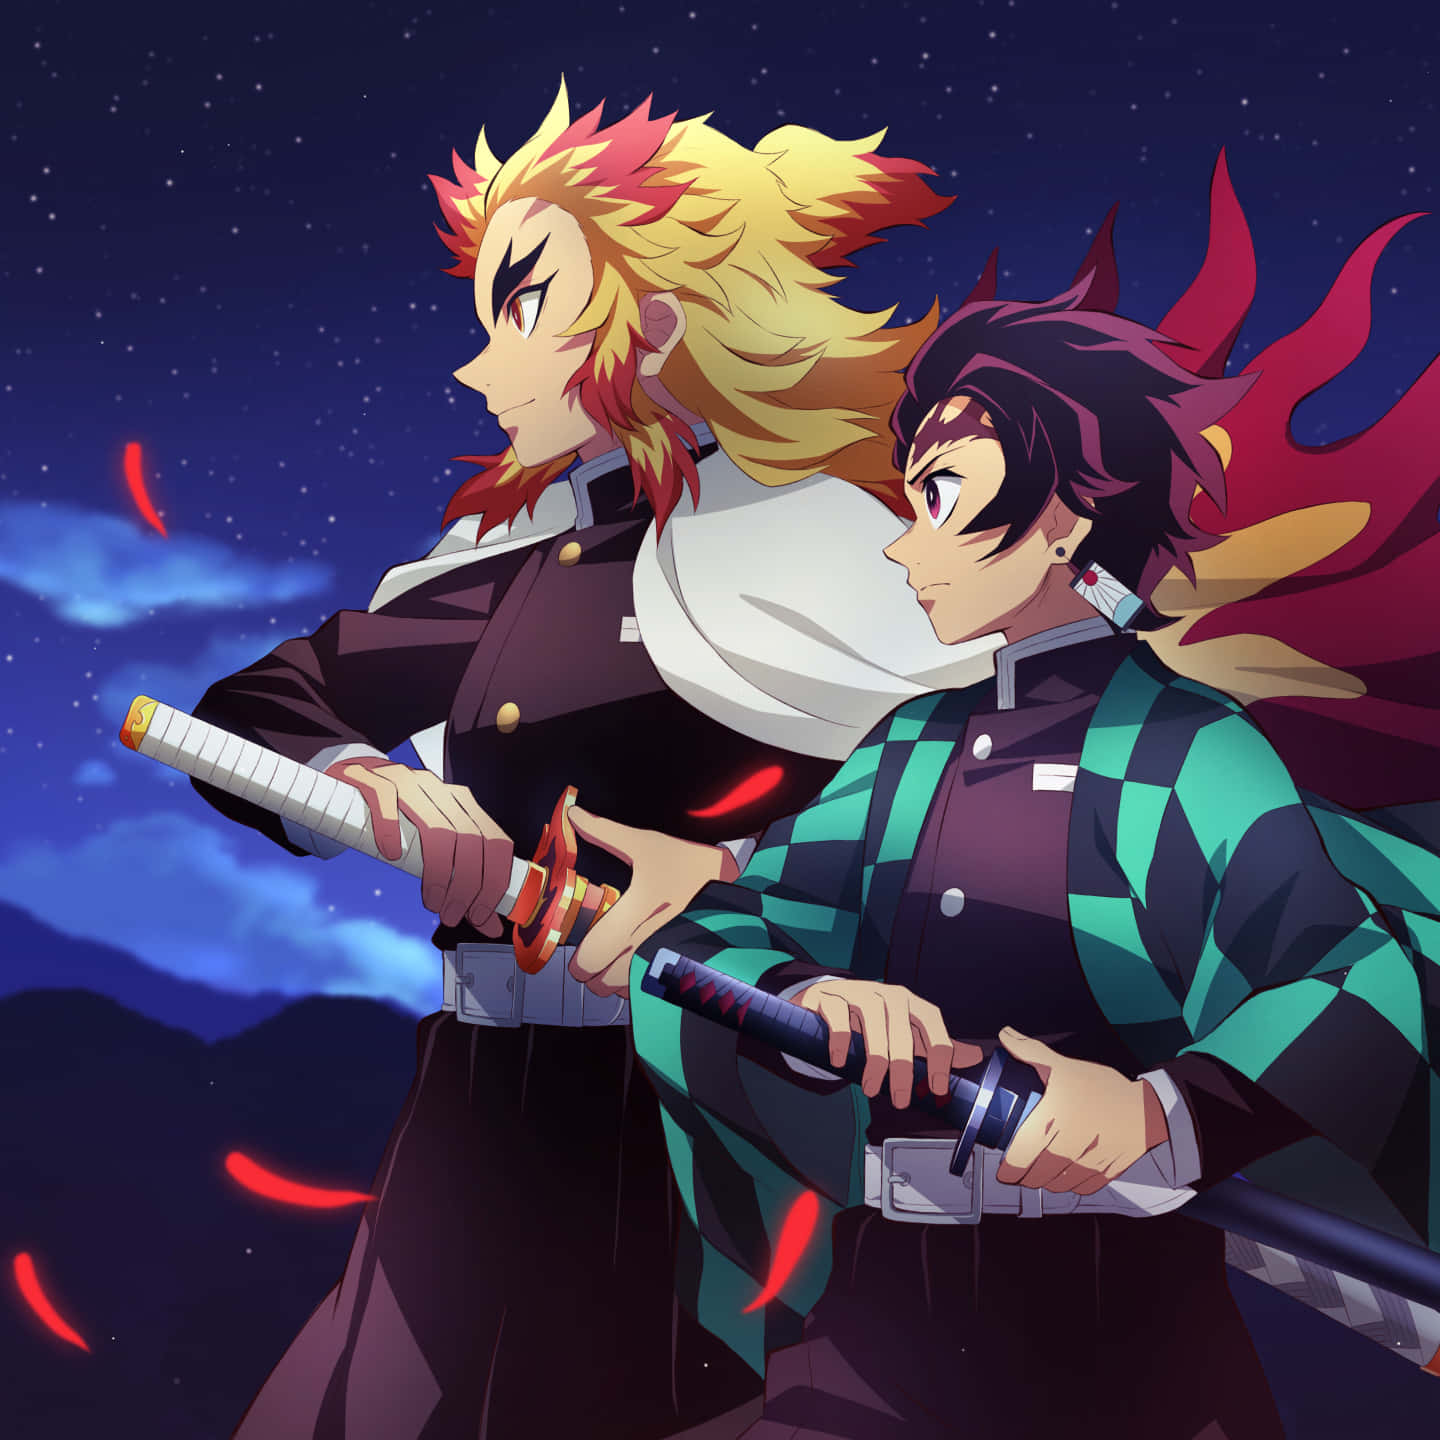 Rengoku and Tanjiro teaming up in fiery combat Wallpaper